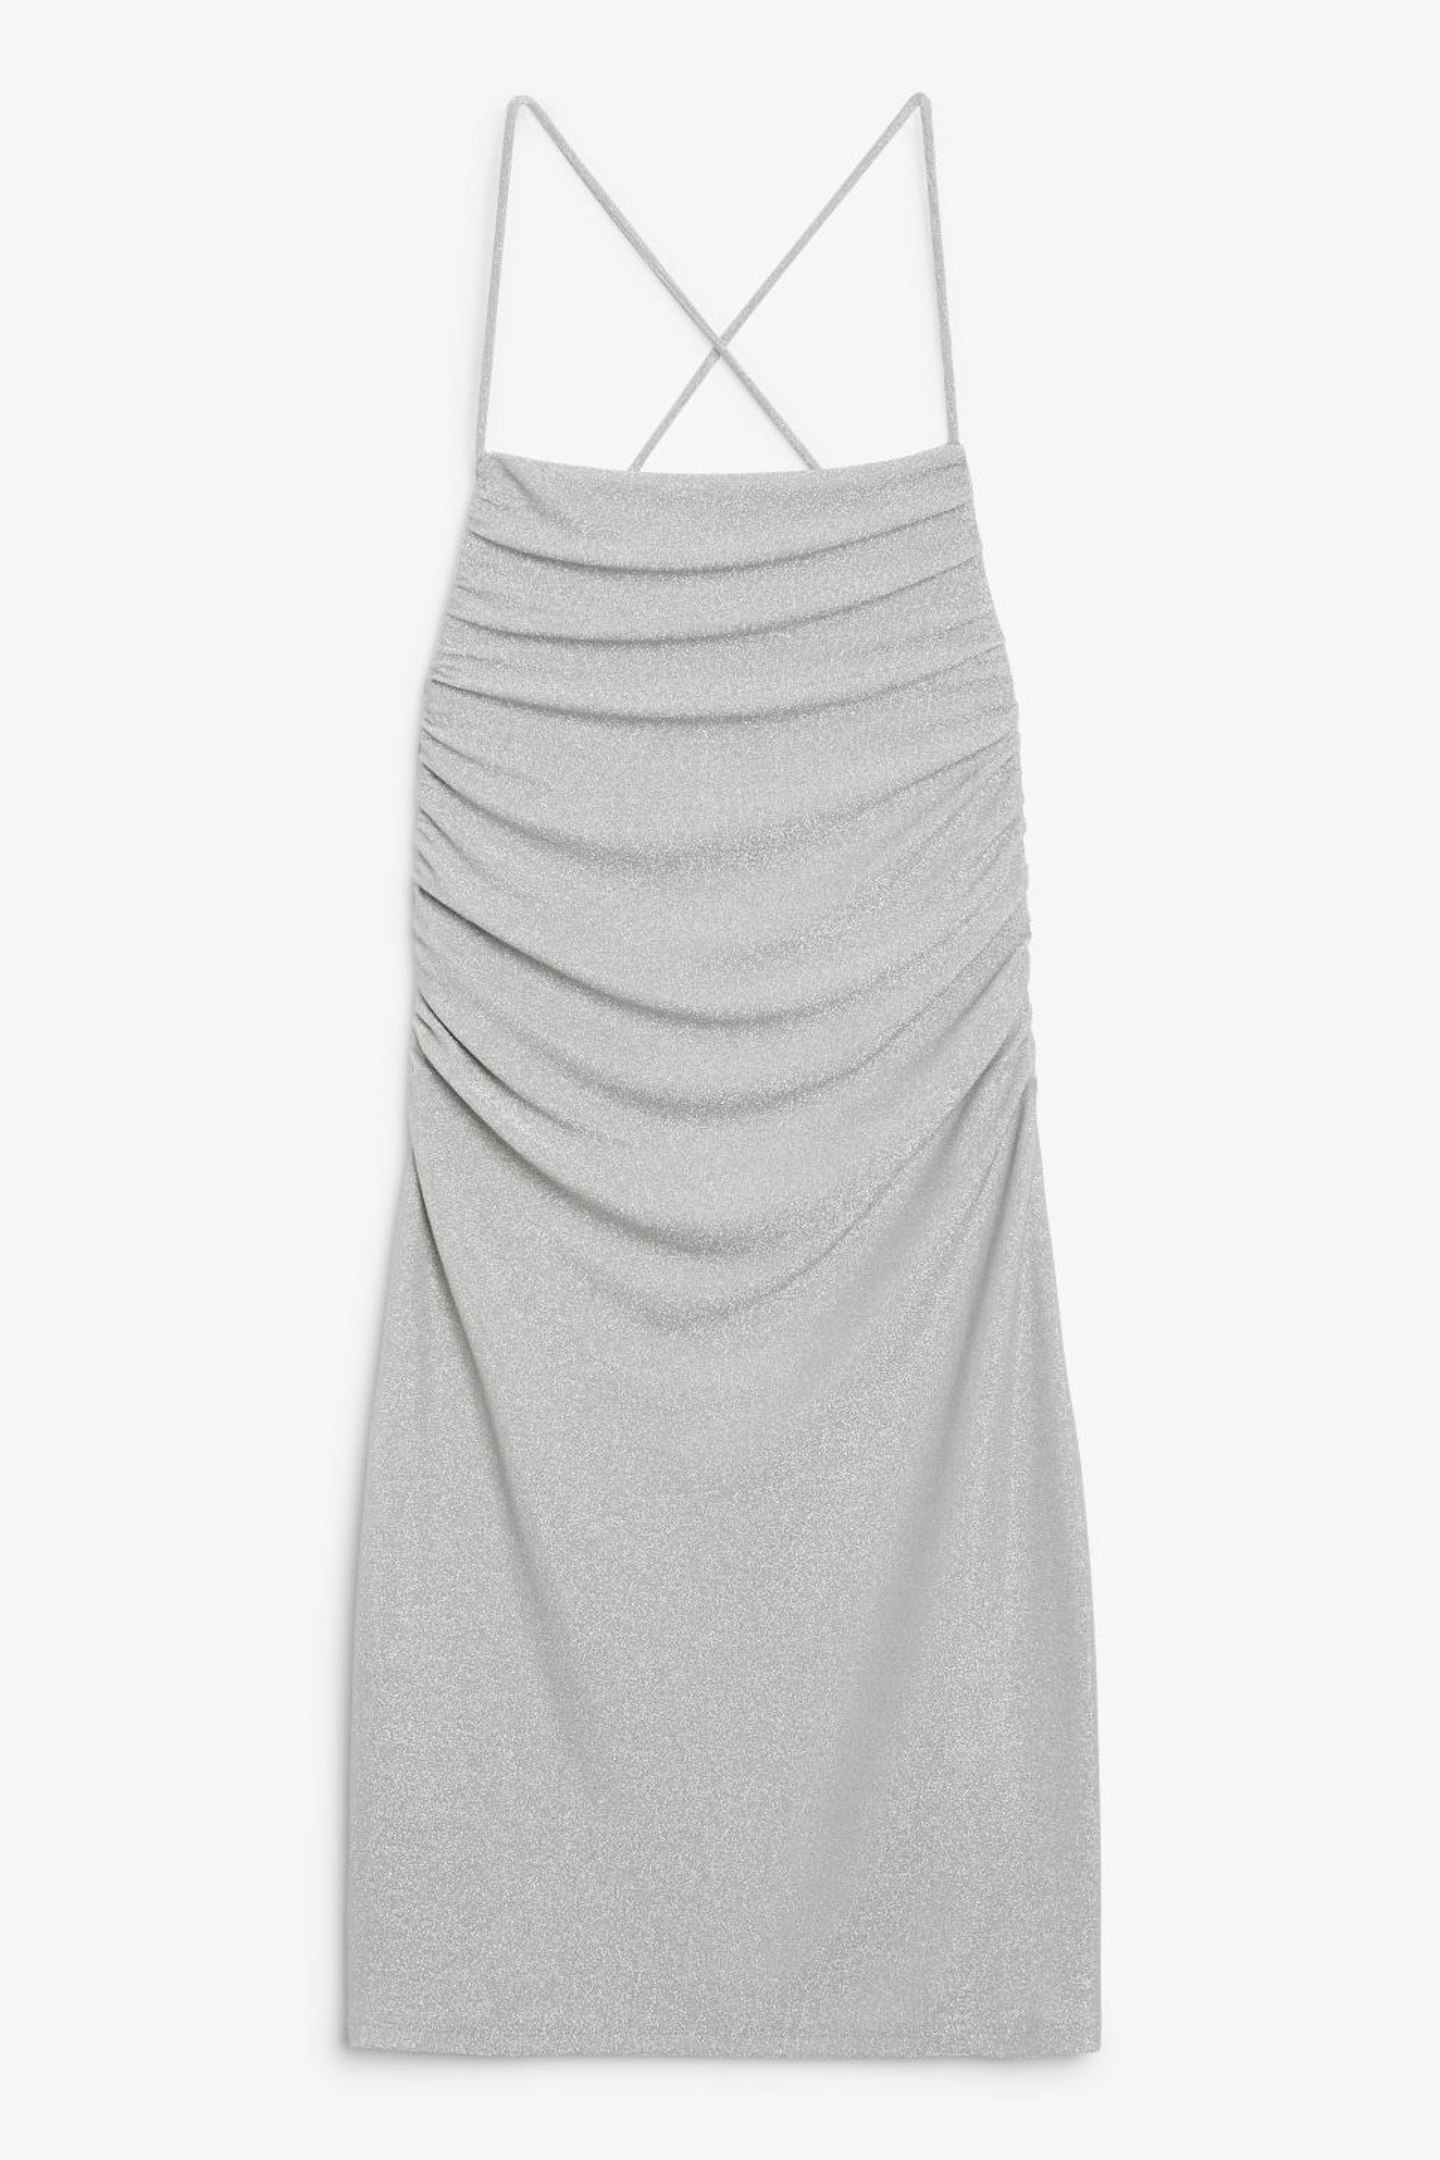 Monki, Silver Glitter Mini Dress